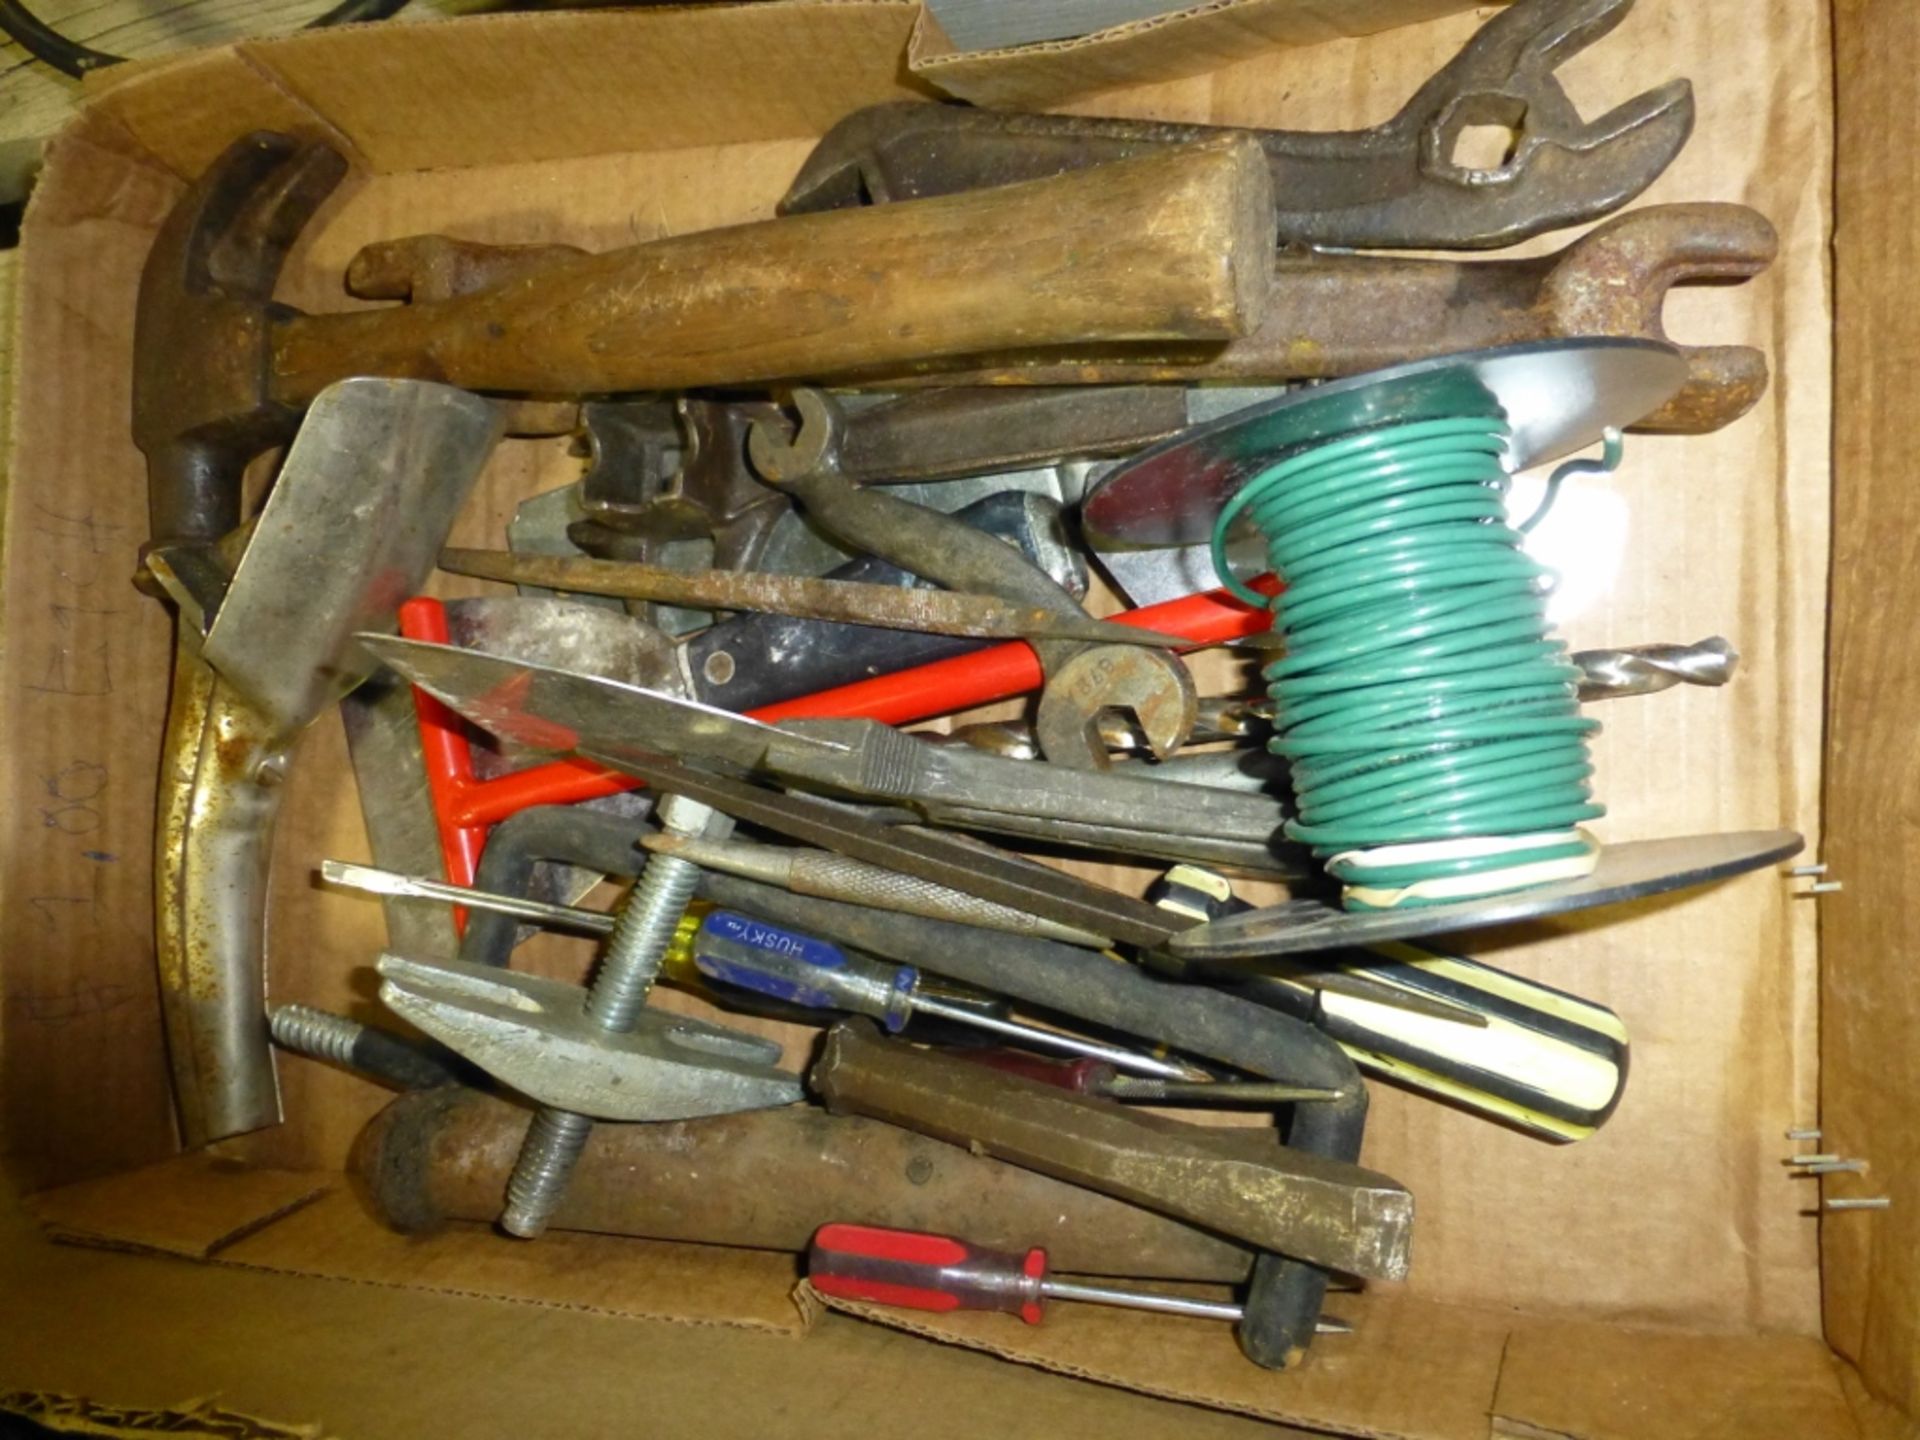 Hammer, fi1e, oil spout, misc. tools